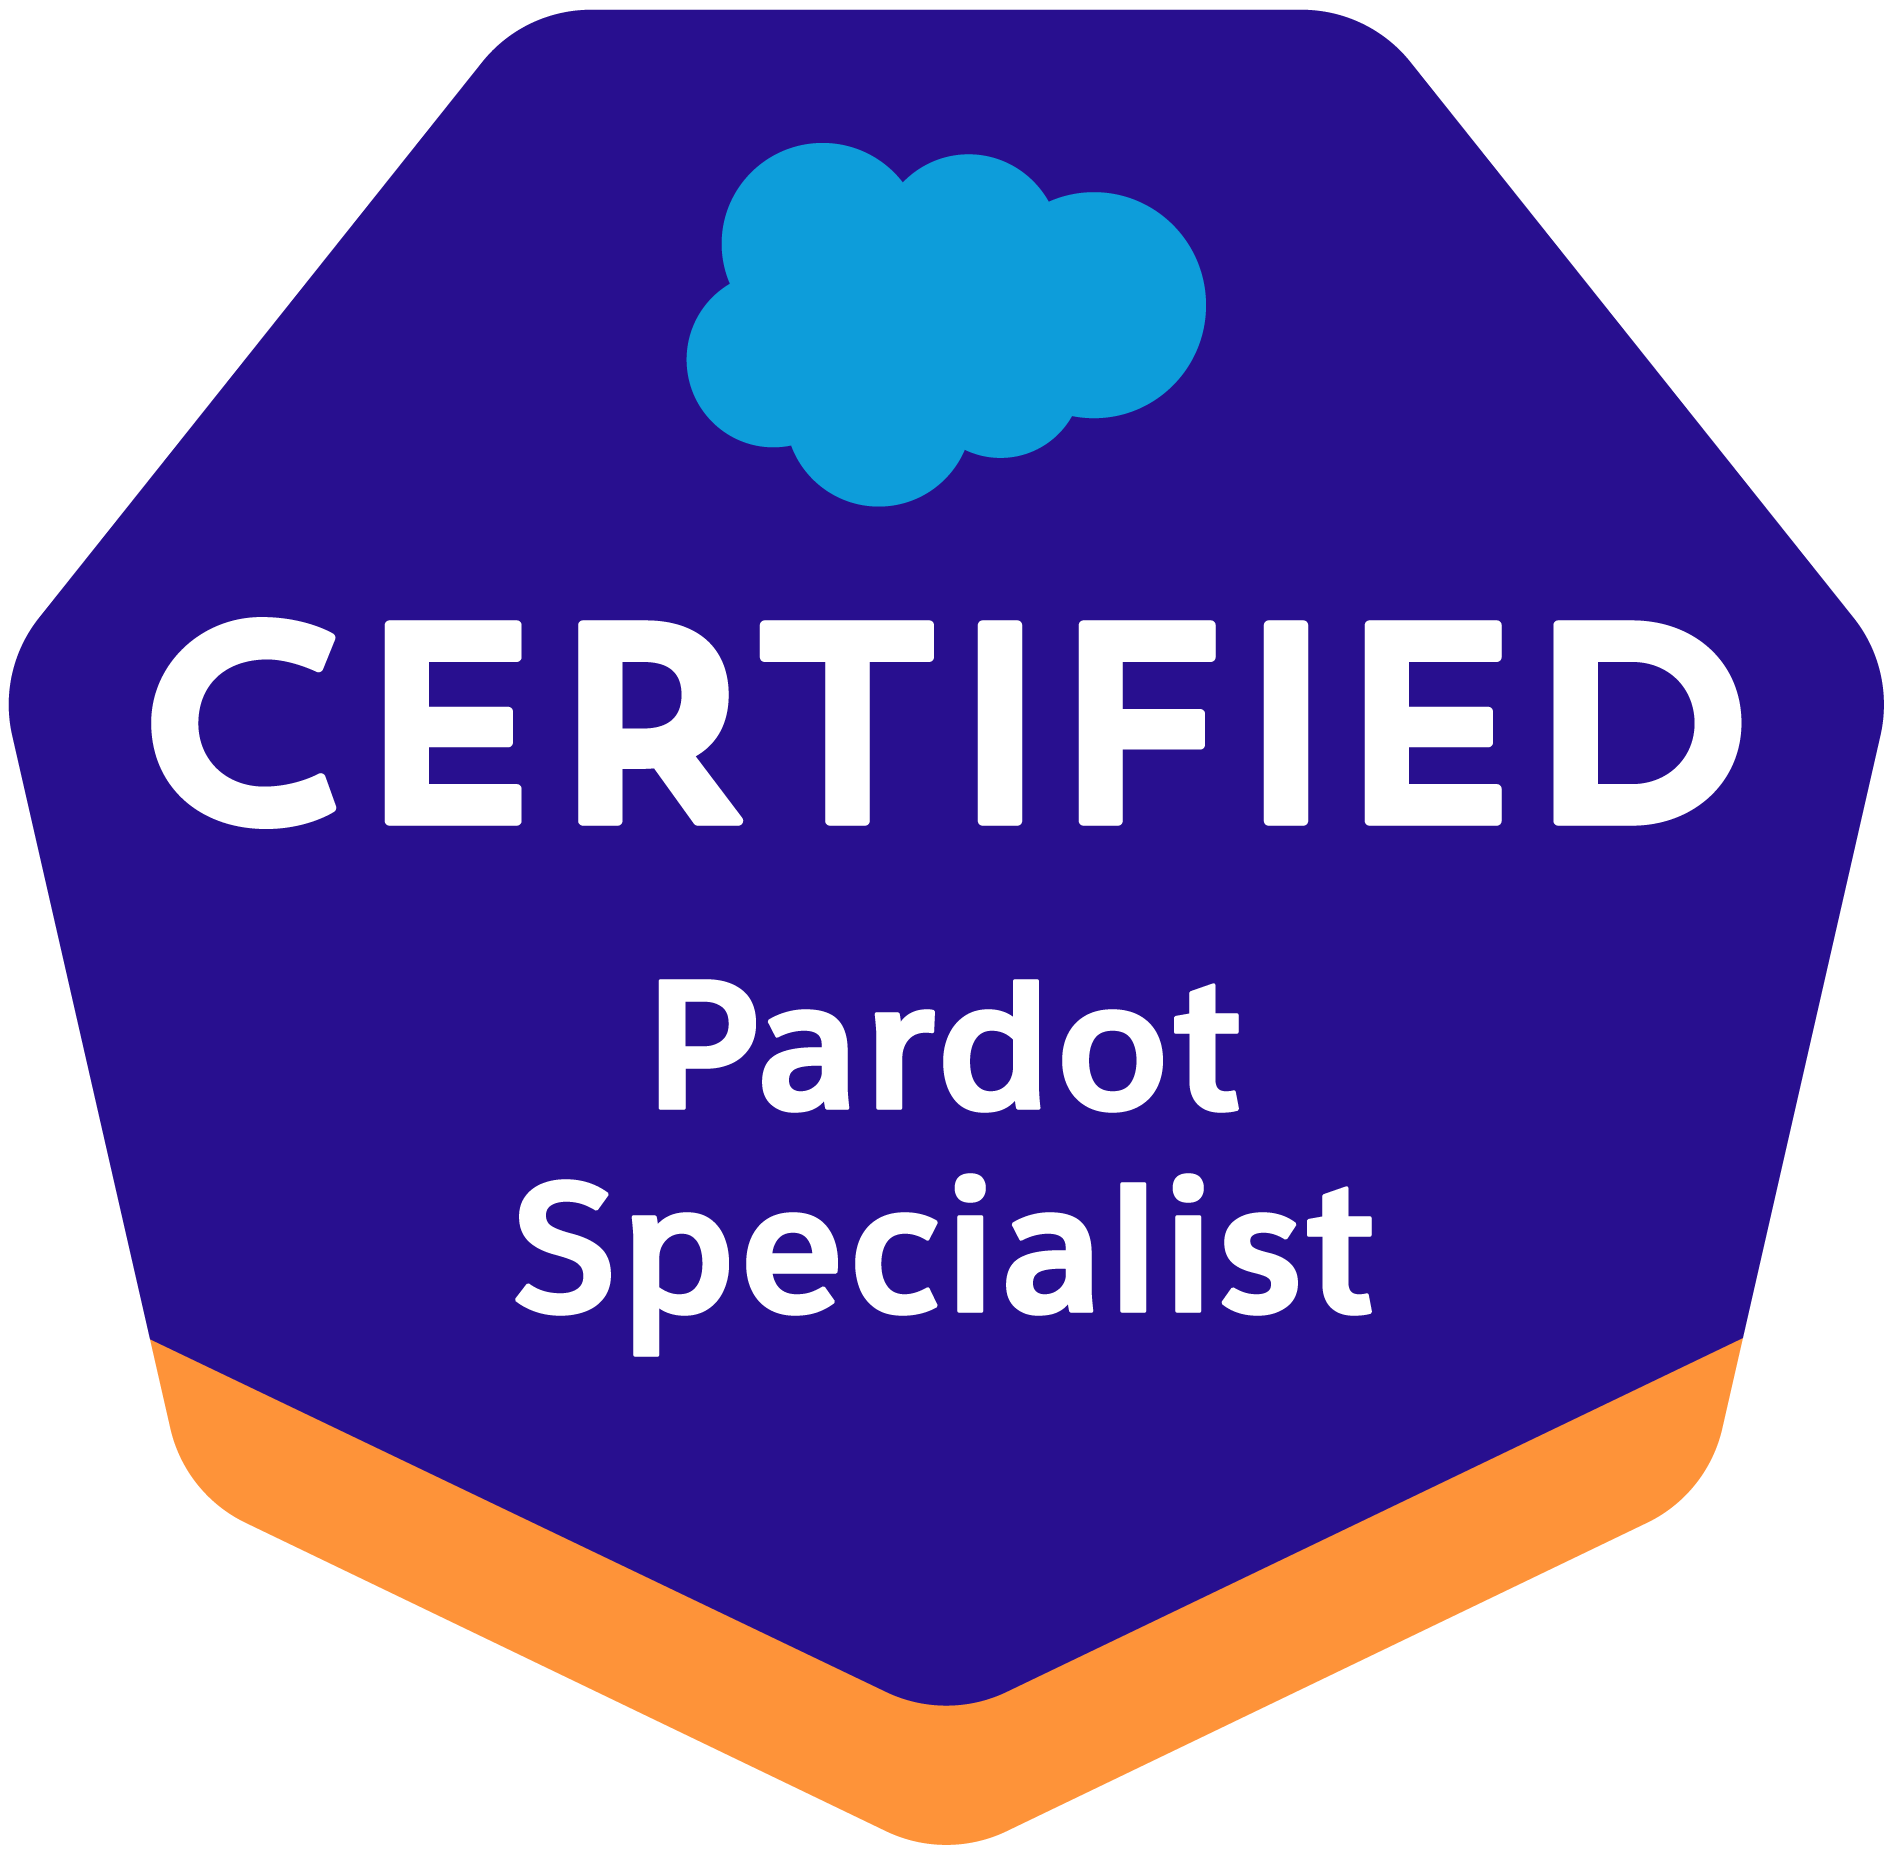 Pardot Specialist certification